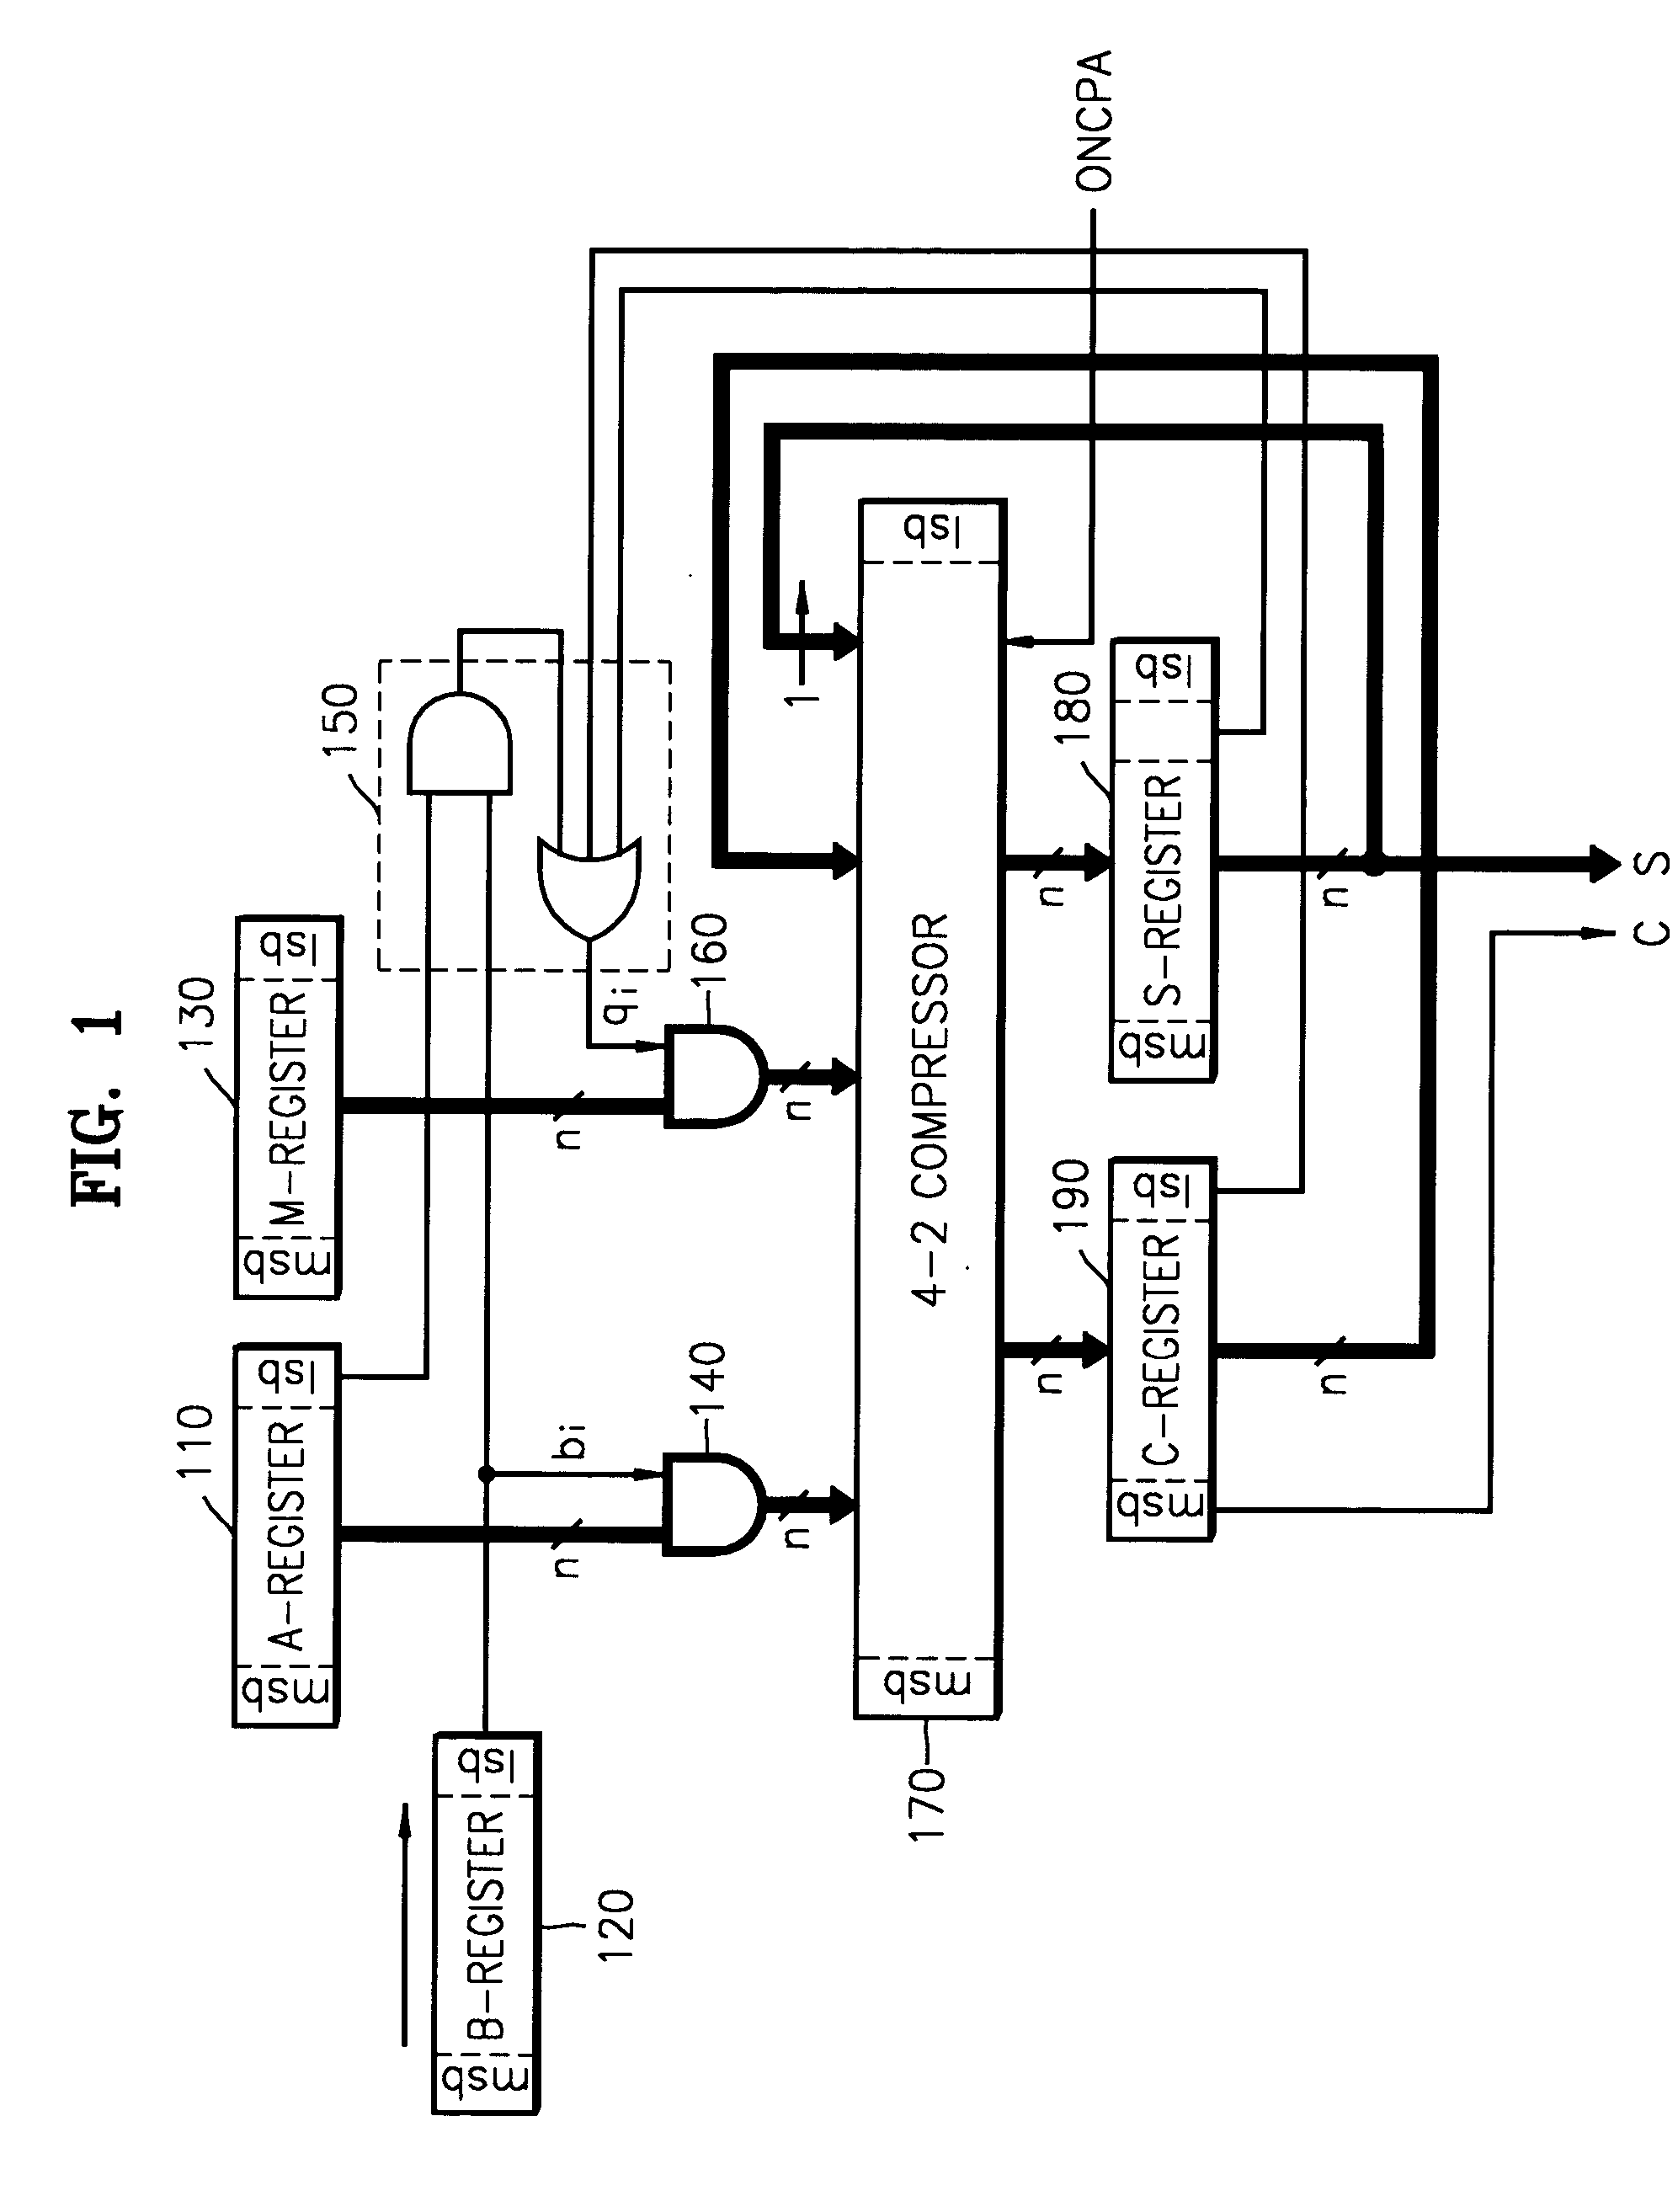 Montgomery modular multiplier using a compressor and multiplication method